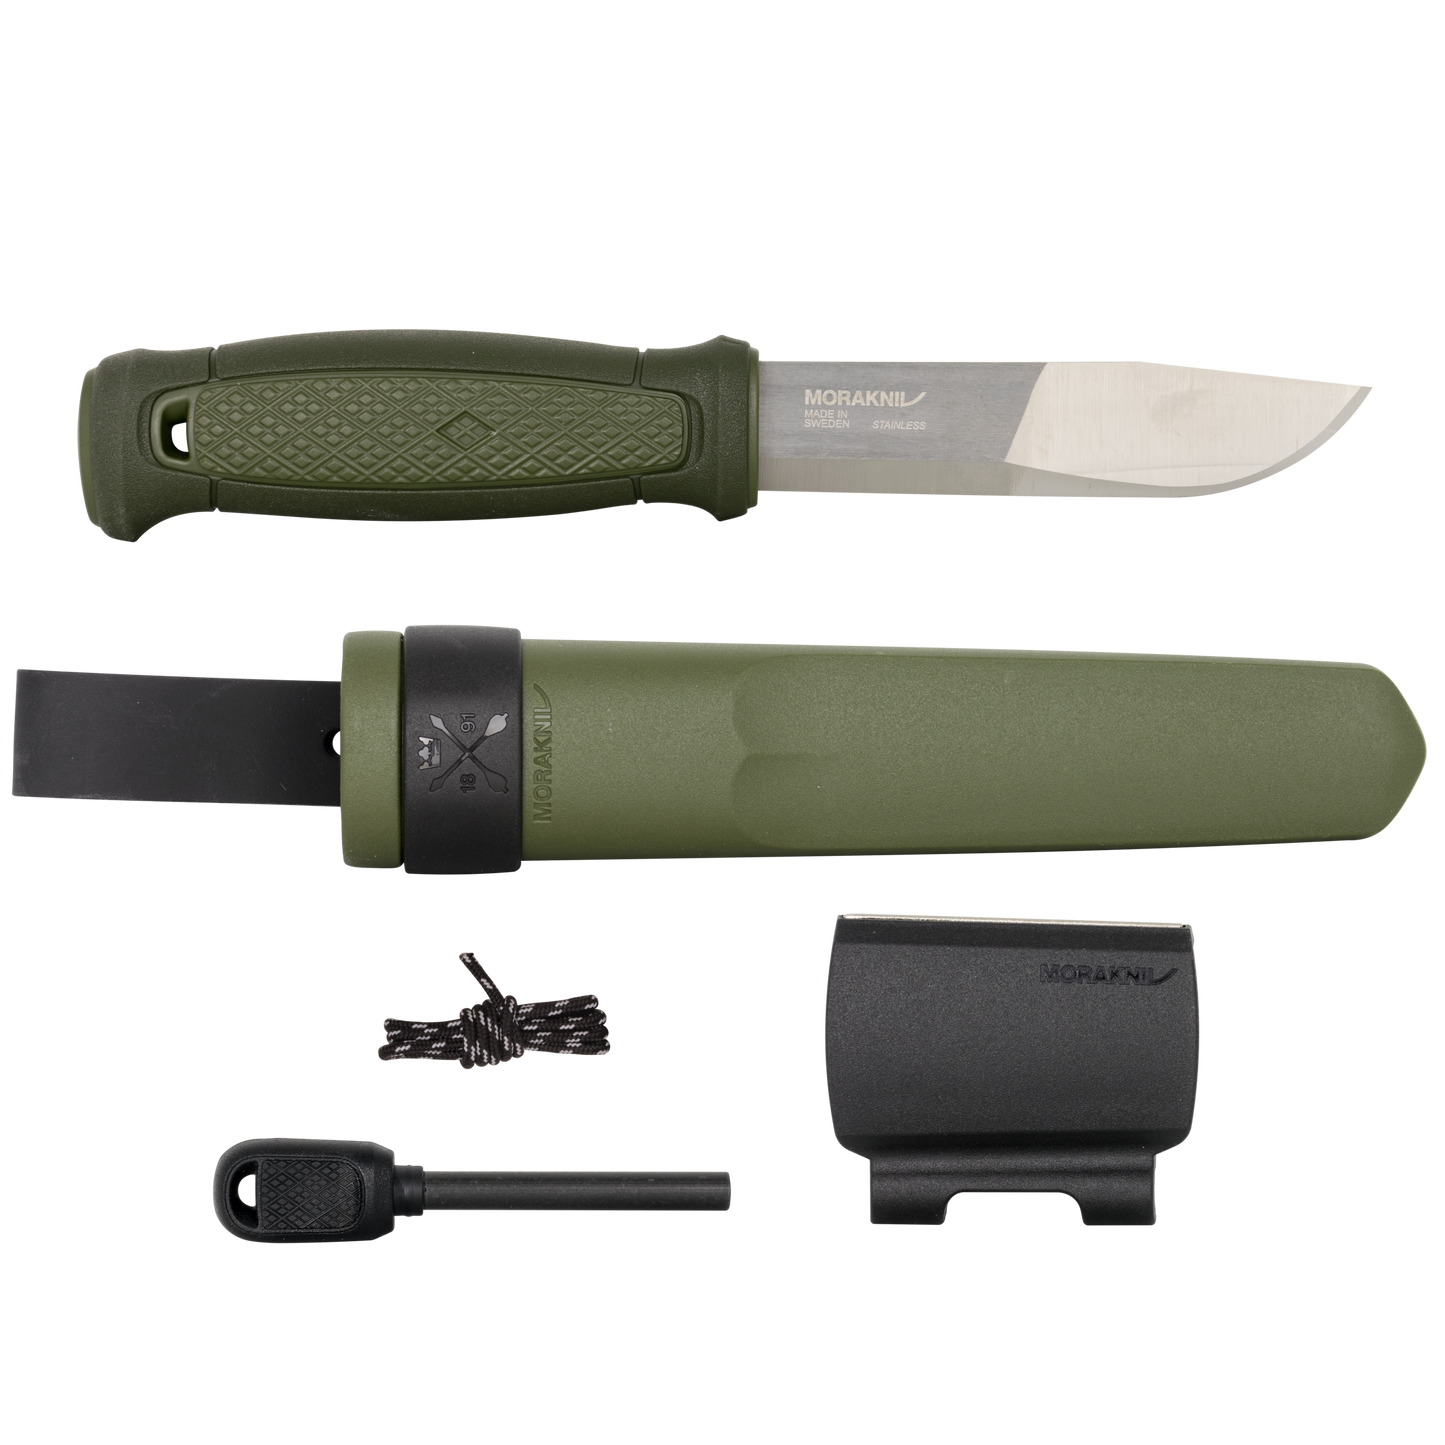 Kansbol Utility Knife with Survival Kit